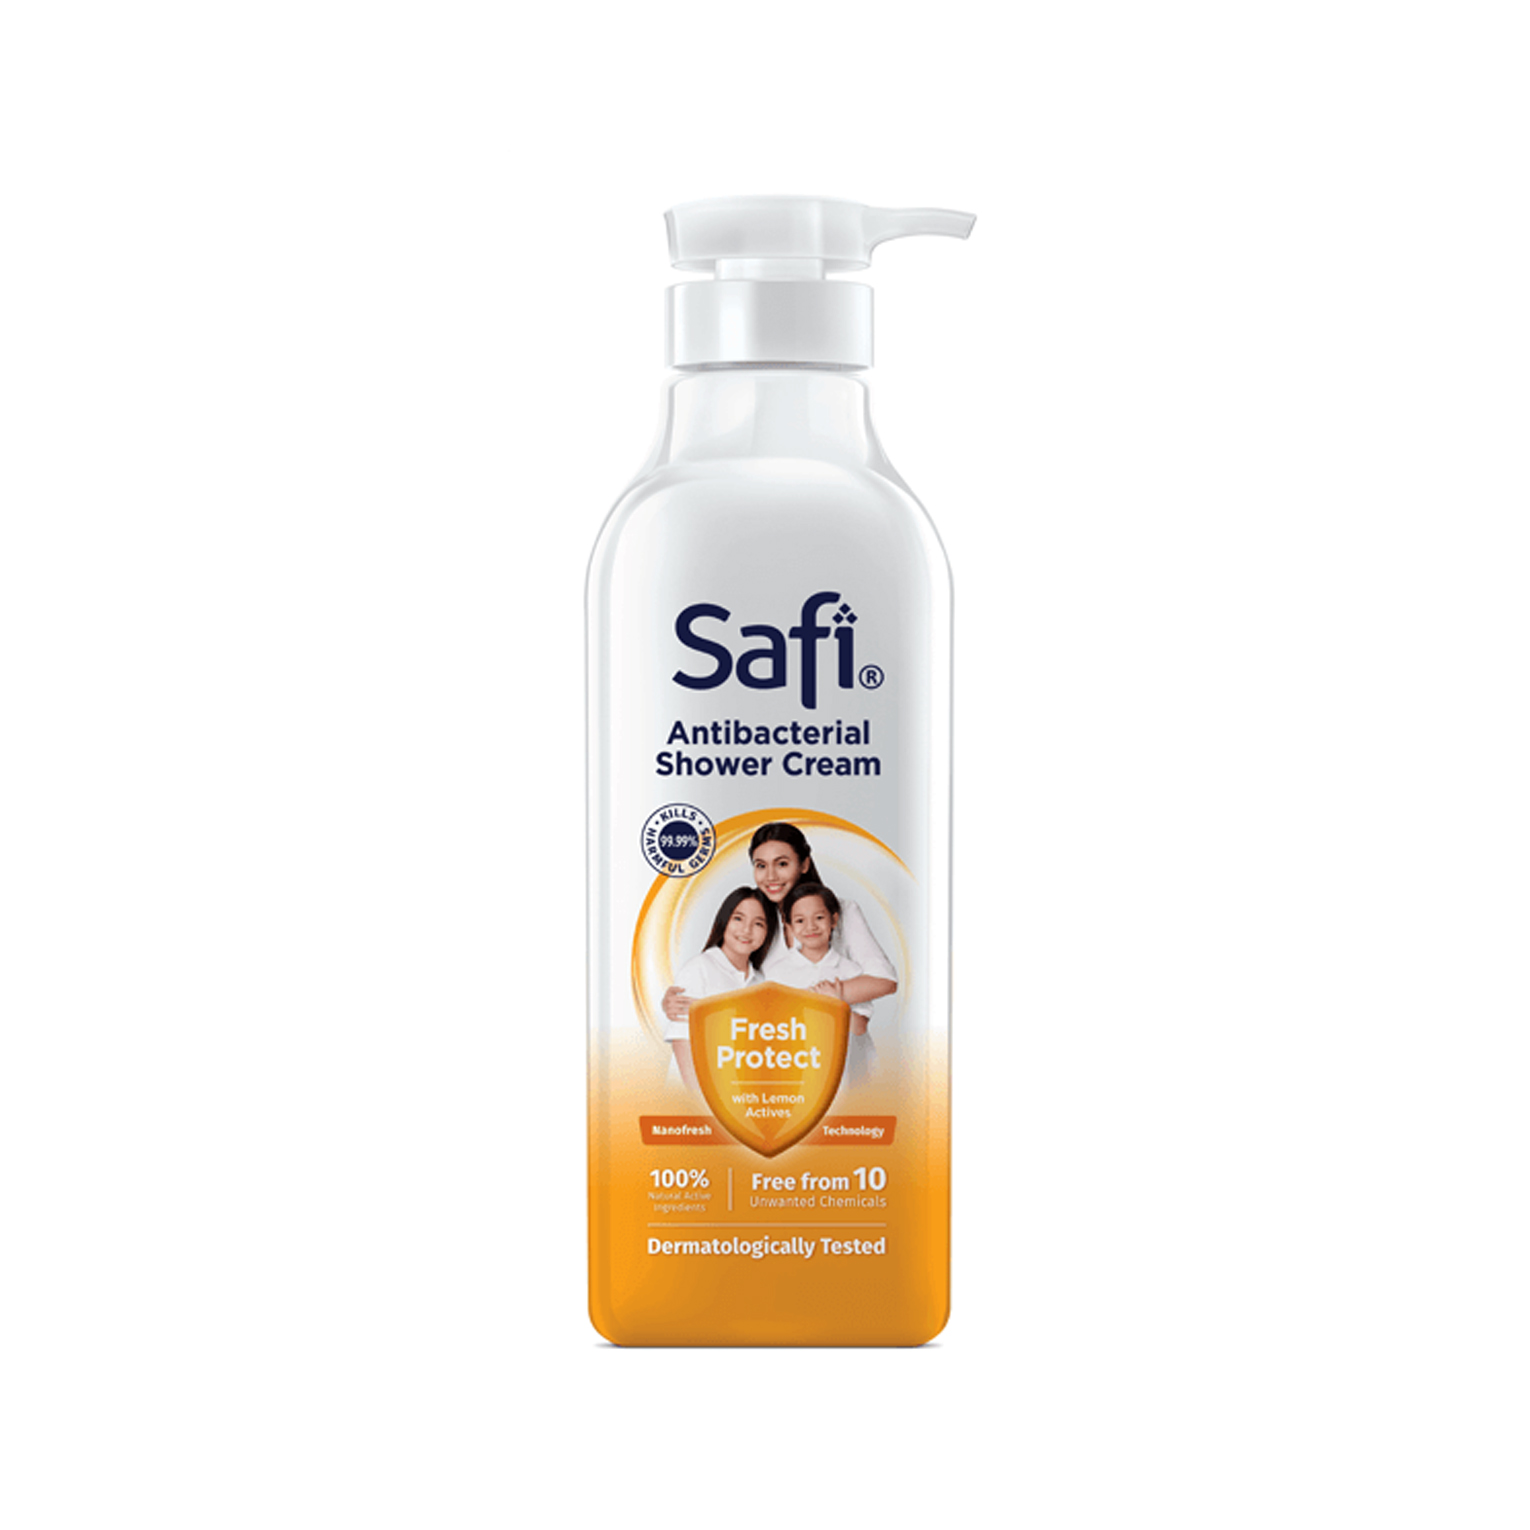 Shower fresh. Safi Вайс хенд. BIOFRESH protect мыло туалетное интенсивно очищающее 500 мл.